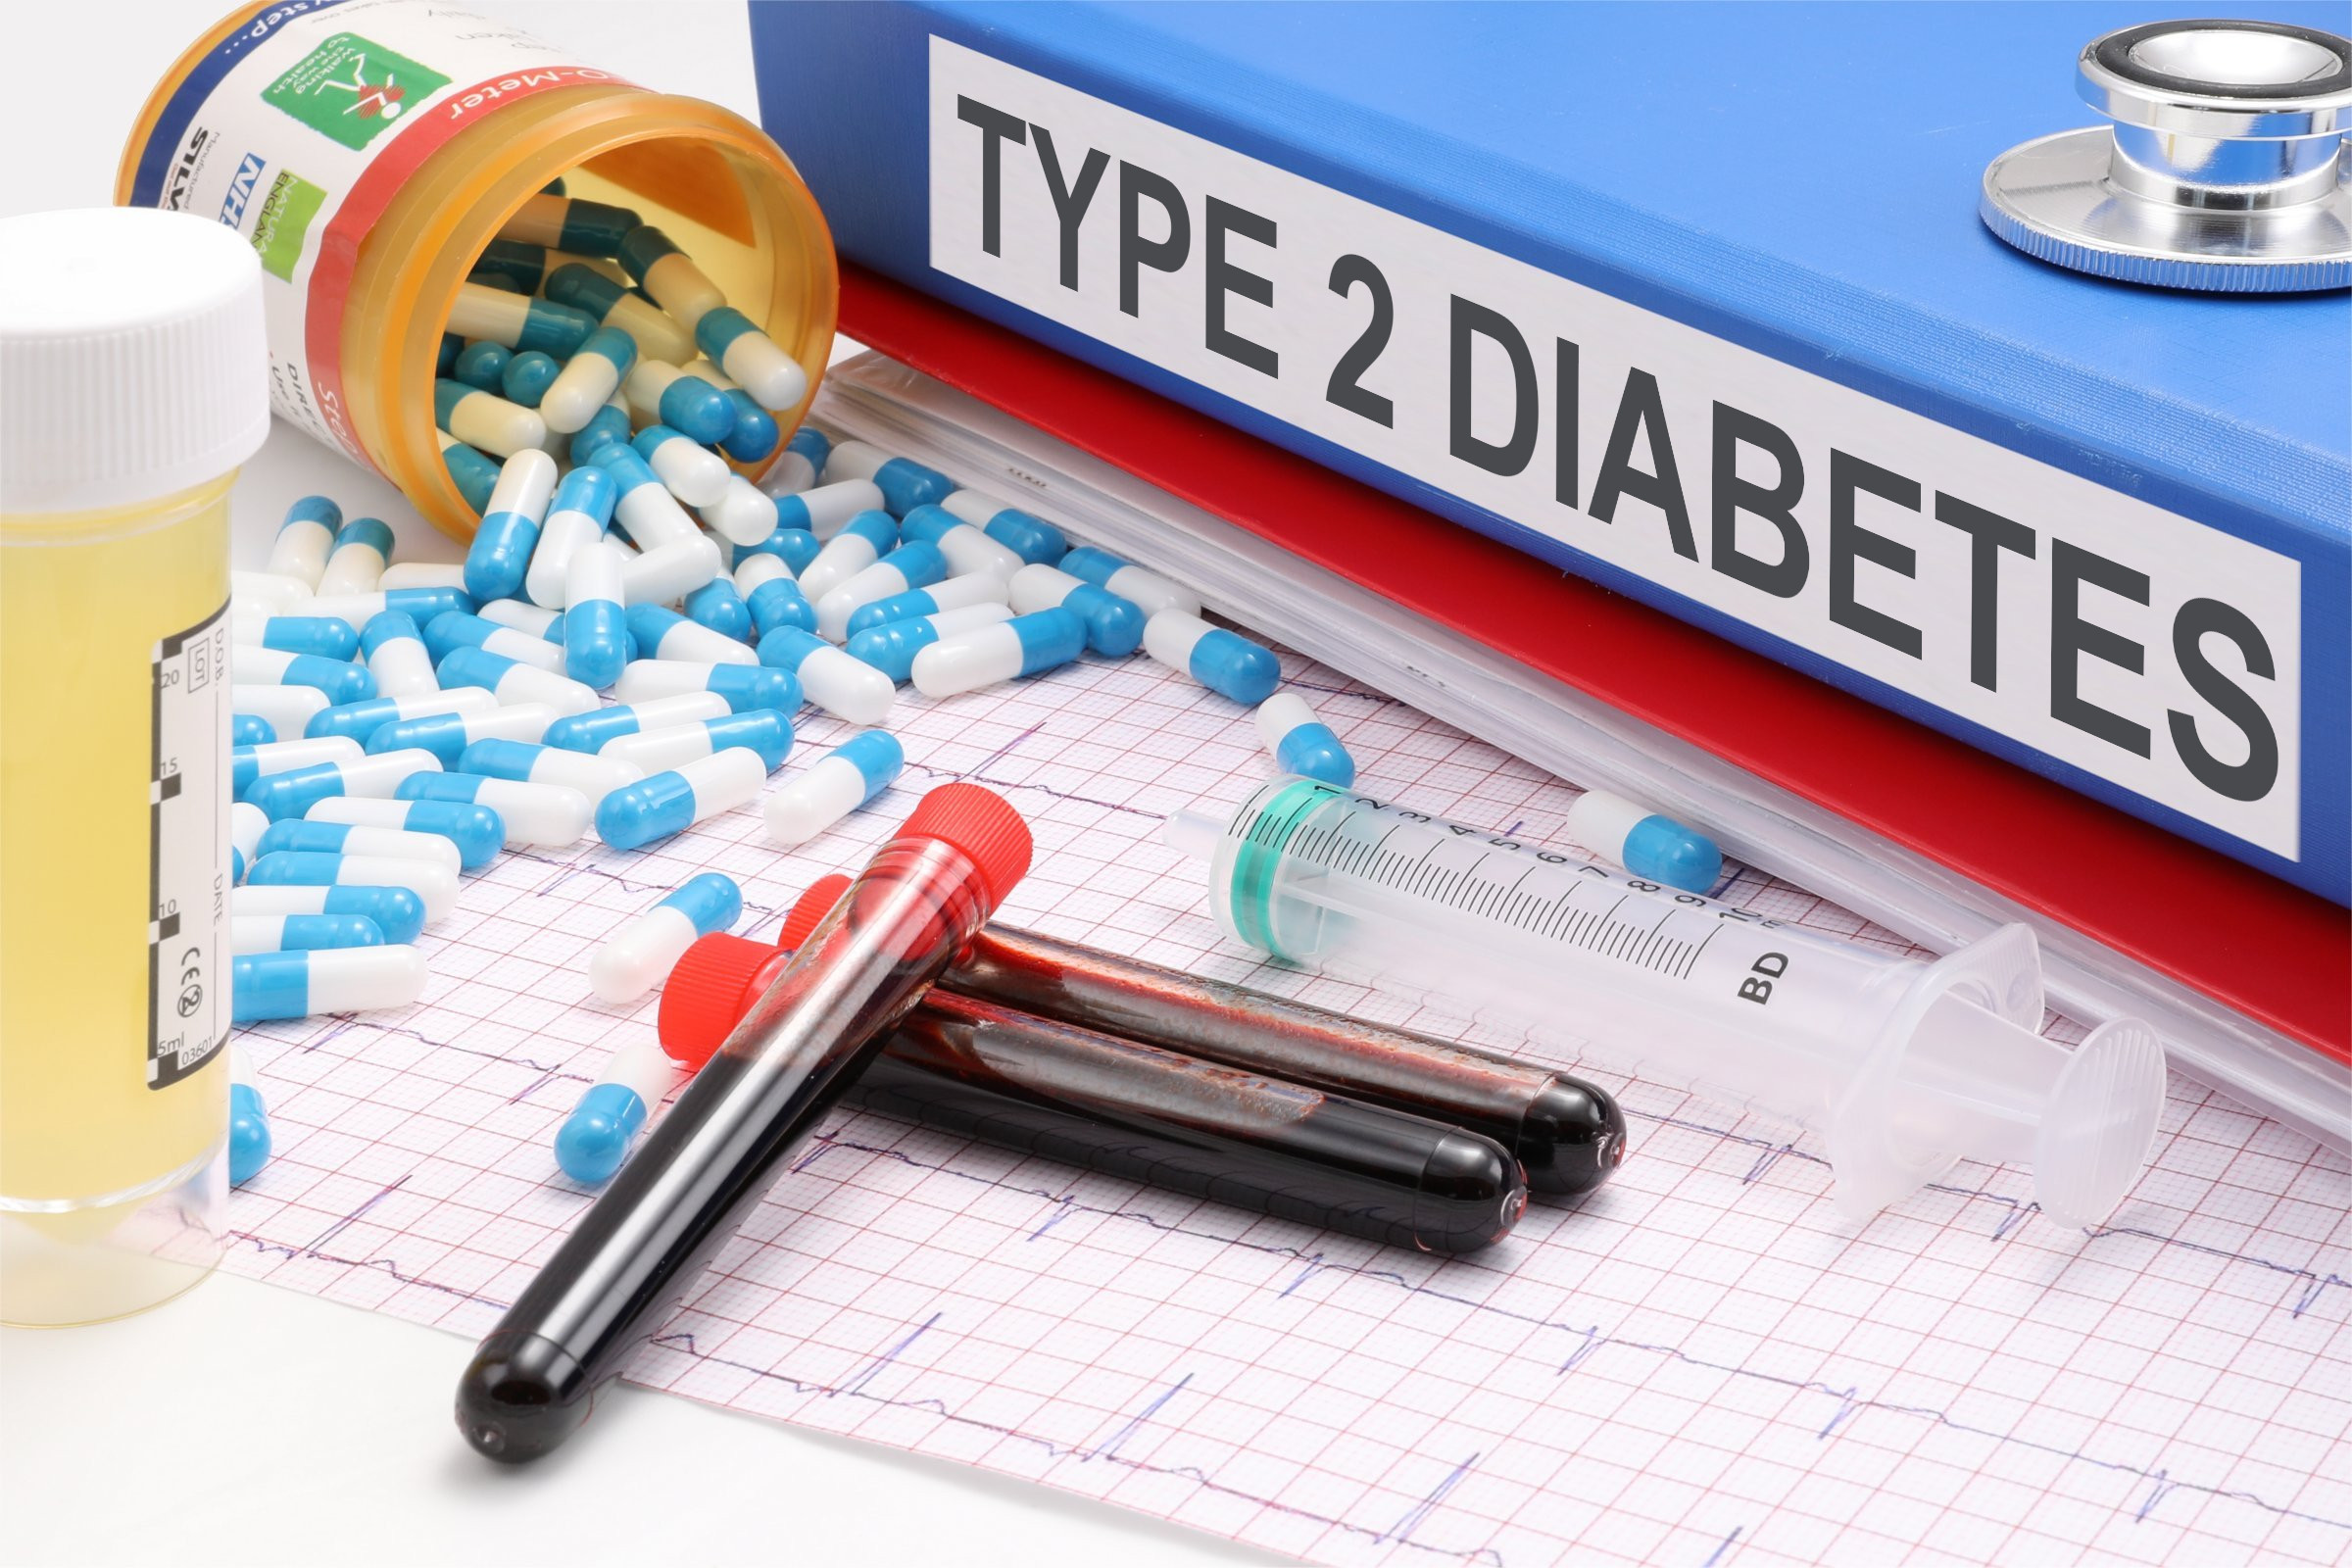 Type-2-diabetes